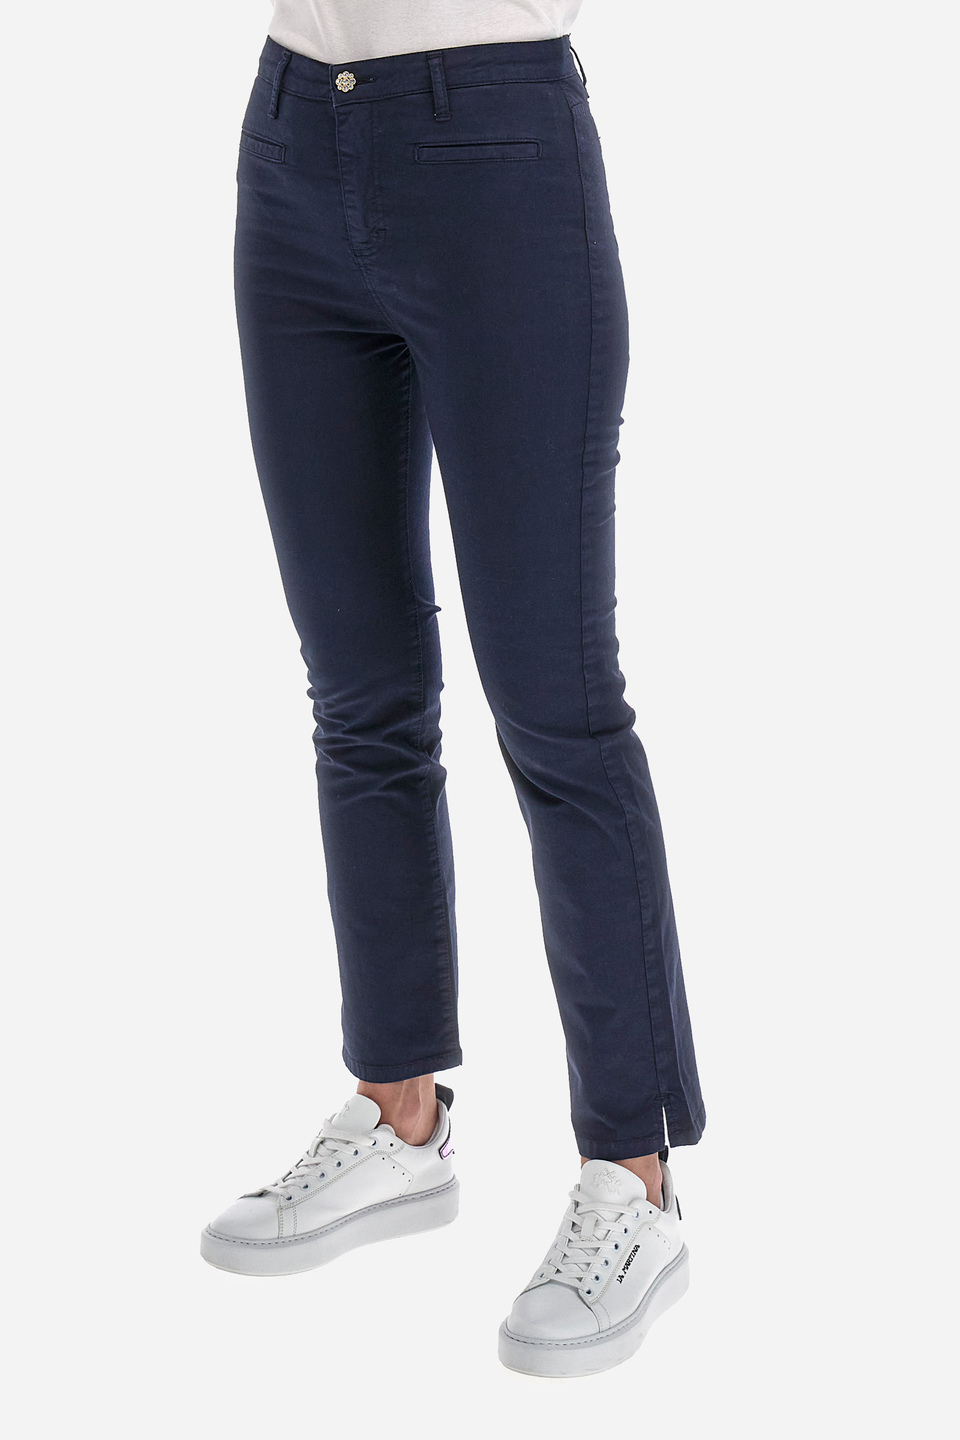 Zara Navy Blue Skinny Trousers Sz L Ankle Length Career Cigarette Pants  Chic | eBay